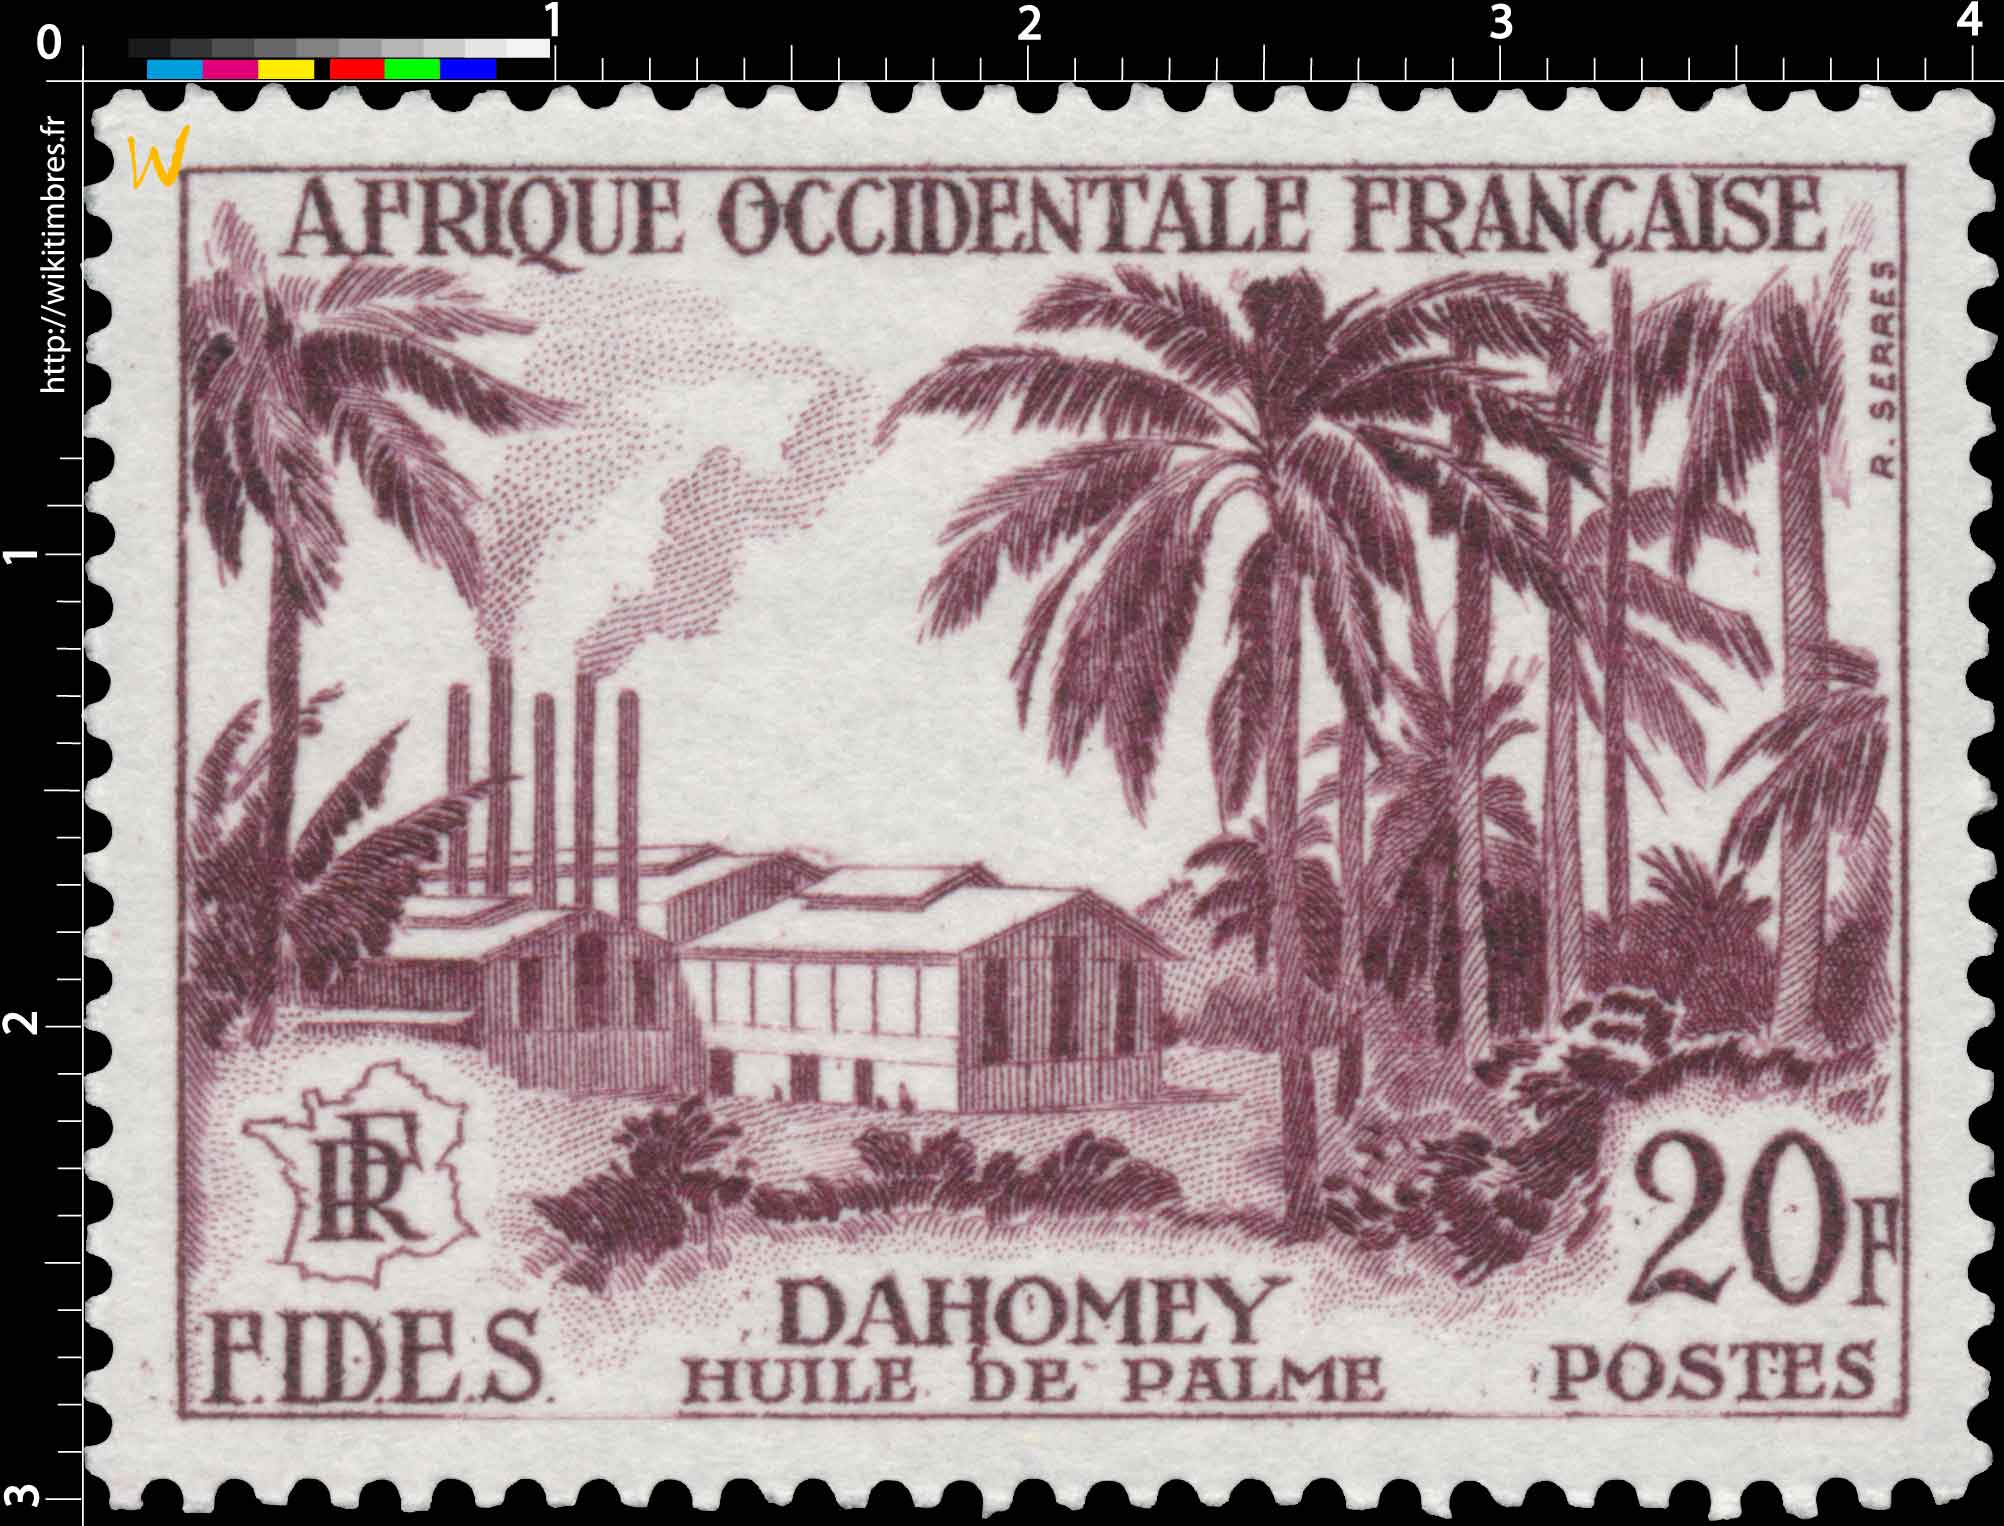 Afrique Occidentale Française - F.I.D.E.S. - huile de palme Dahomey